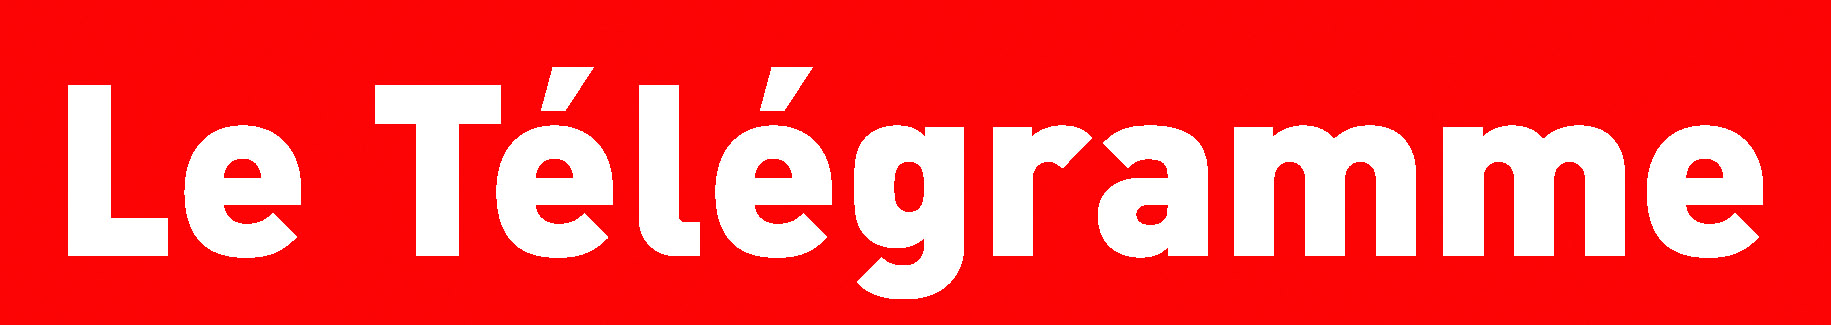 le telegramme-logo